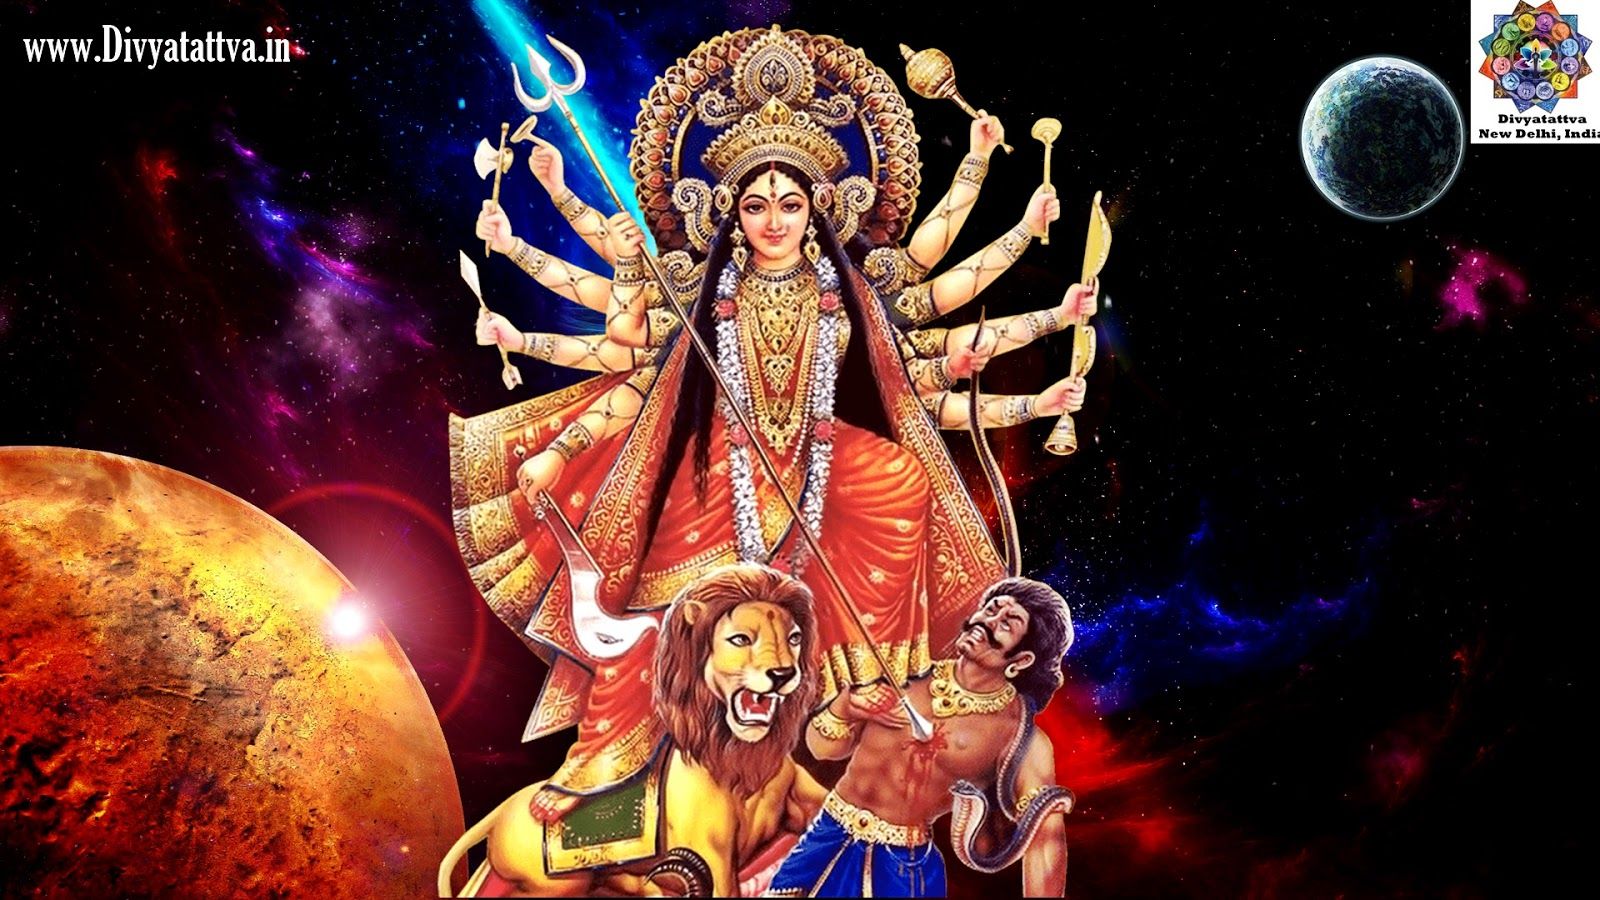 Goddess Durga Wallpaper Hd, Maa Durga Wallpaper Full